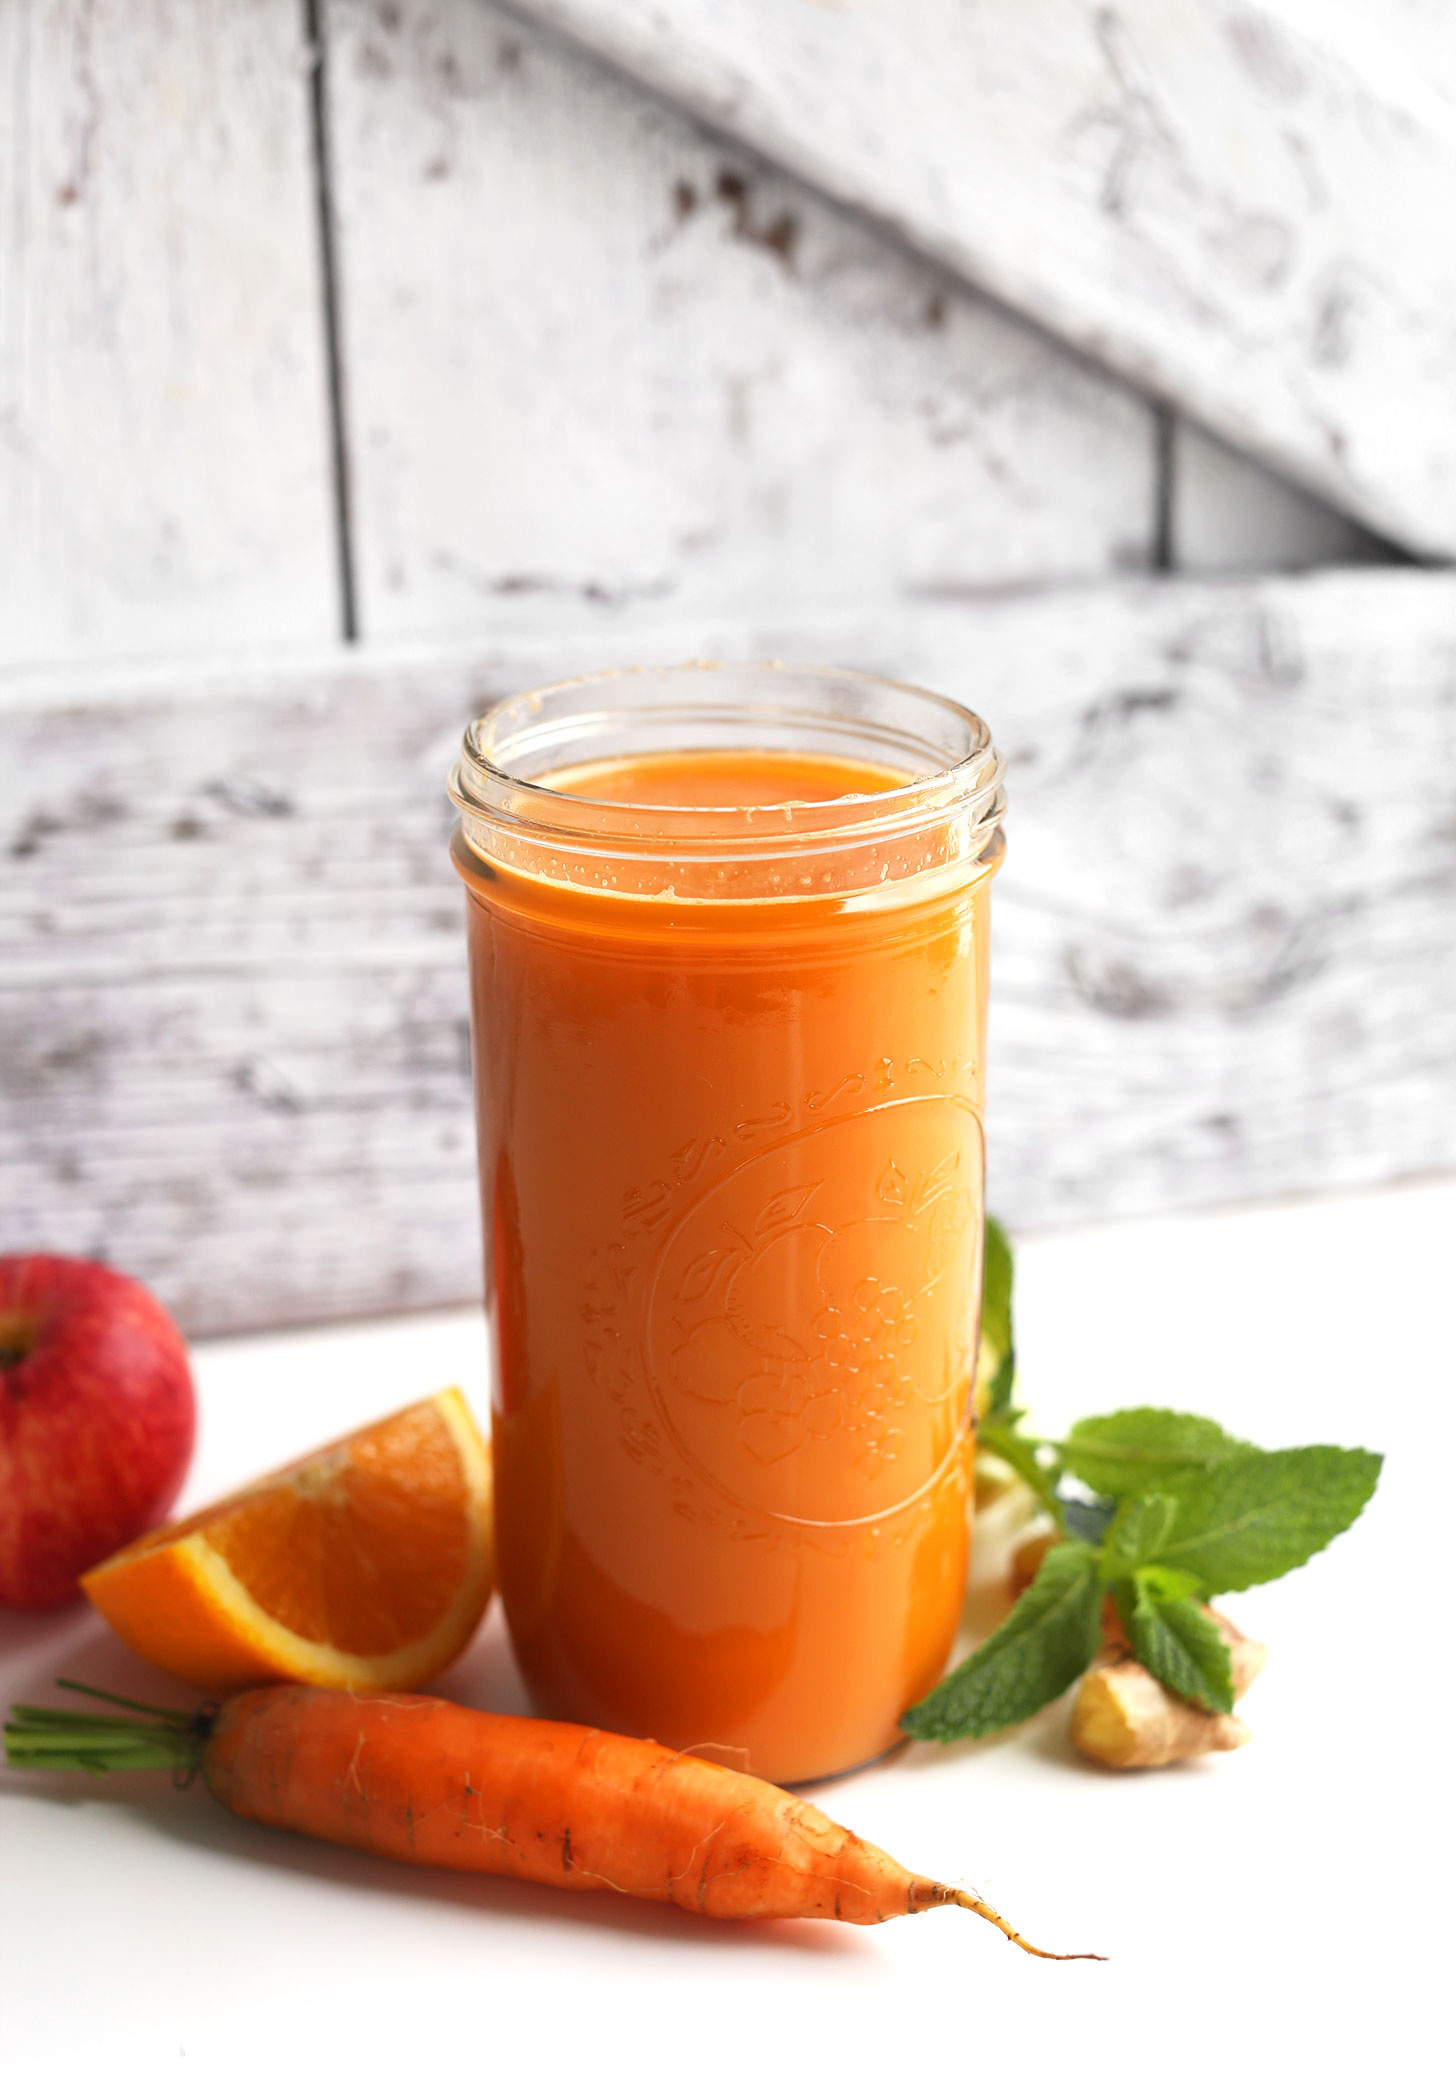 Carrot orange marvel, Nutritious power, Vibrant concoction, Healthy indulgence, 1460x2100 HD Handy